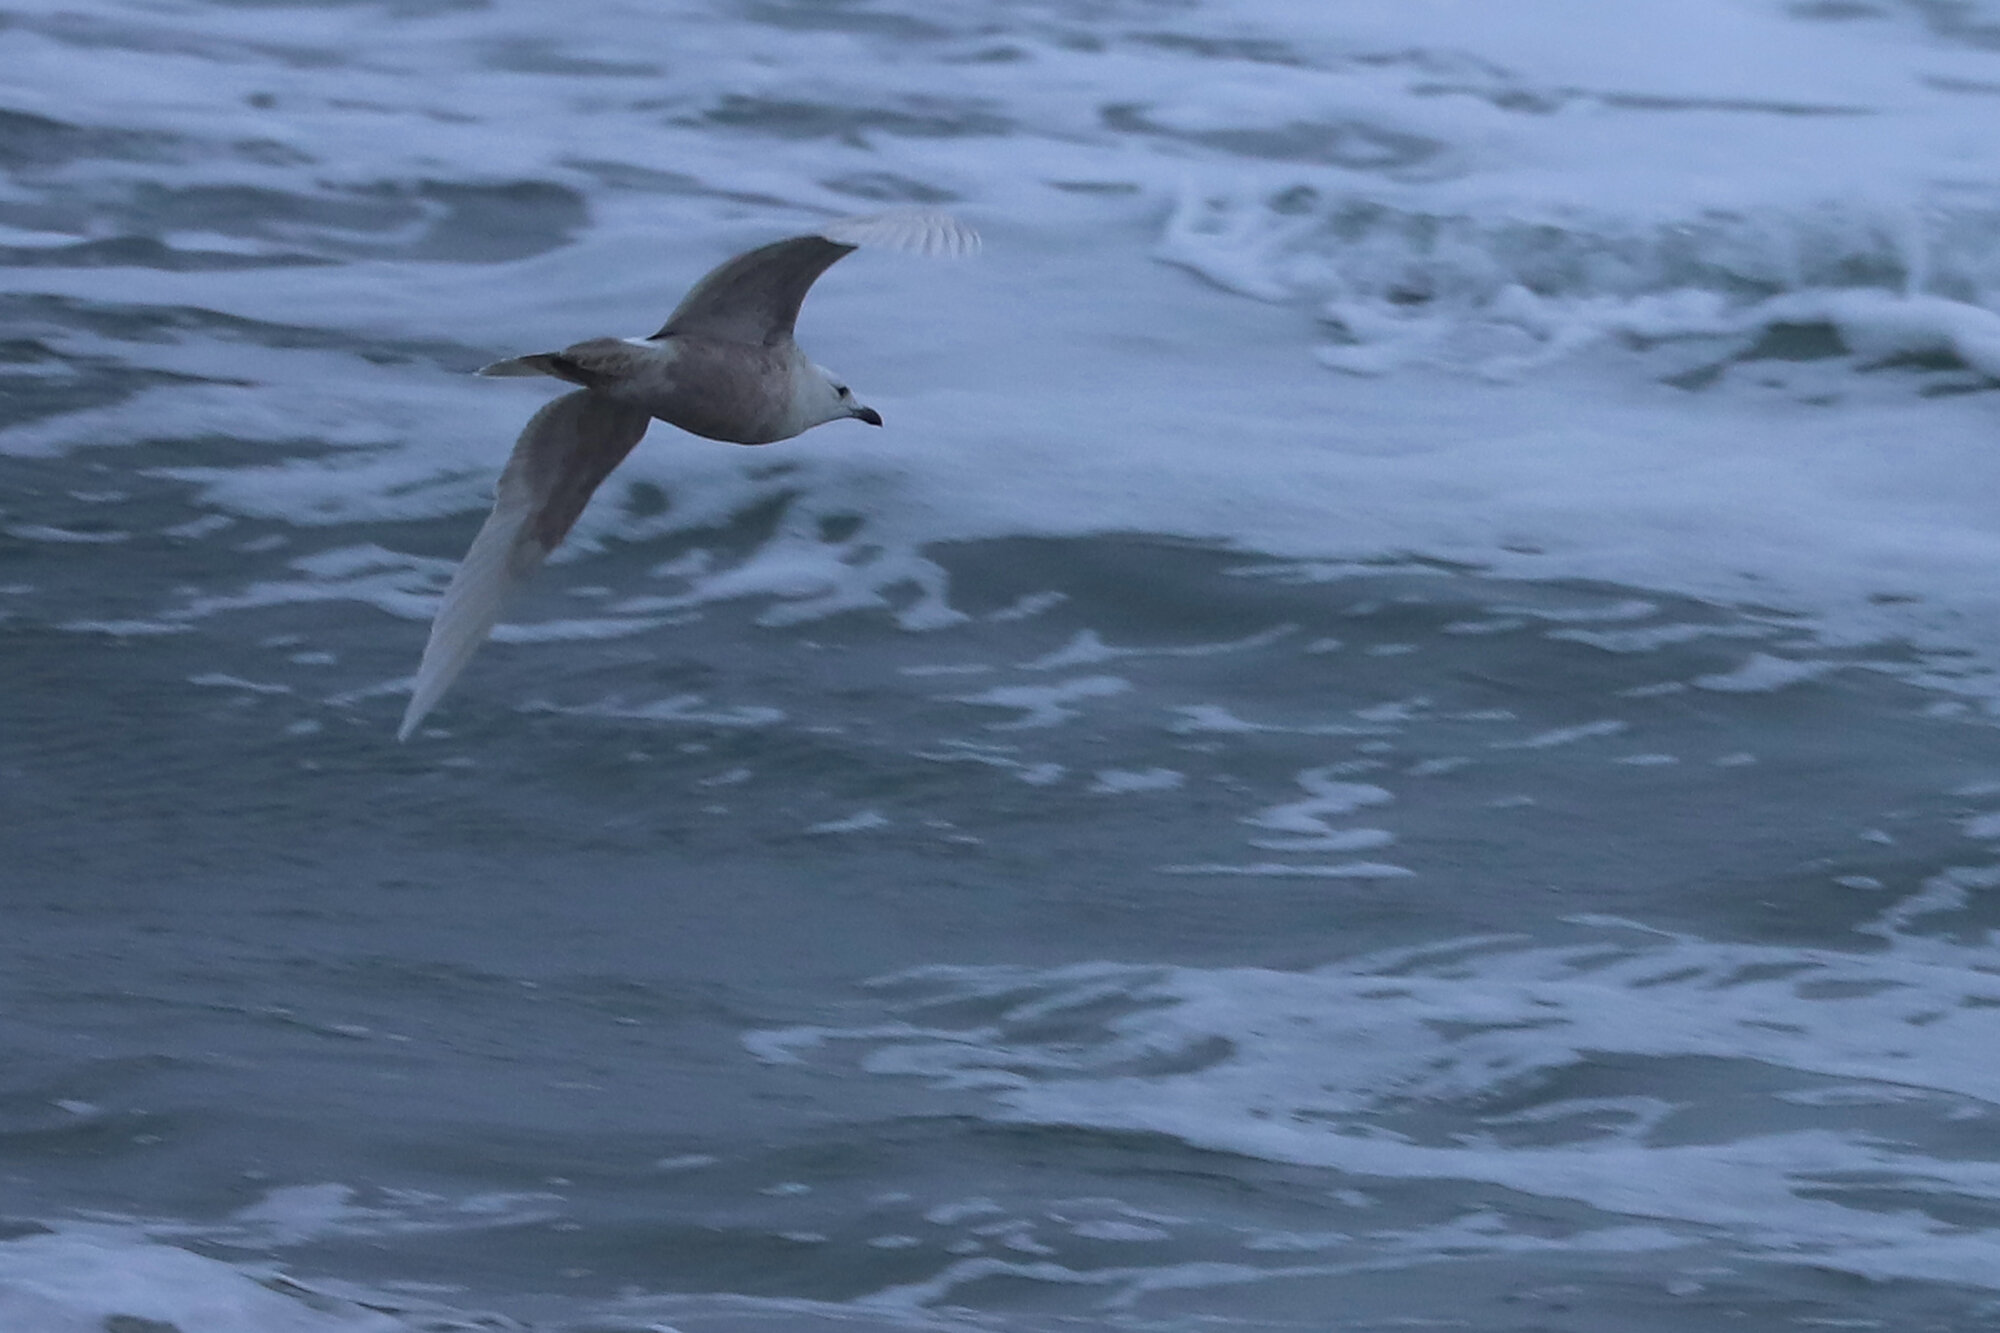  Iceland Gull / Sandbridge Beach / 1 Feb 